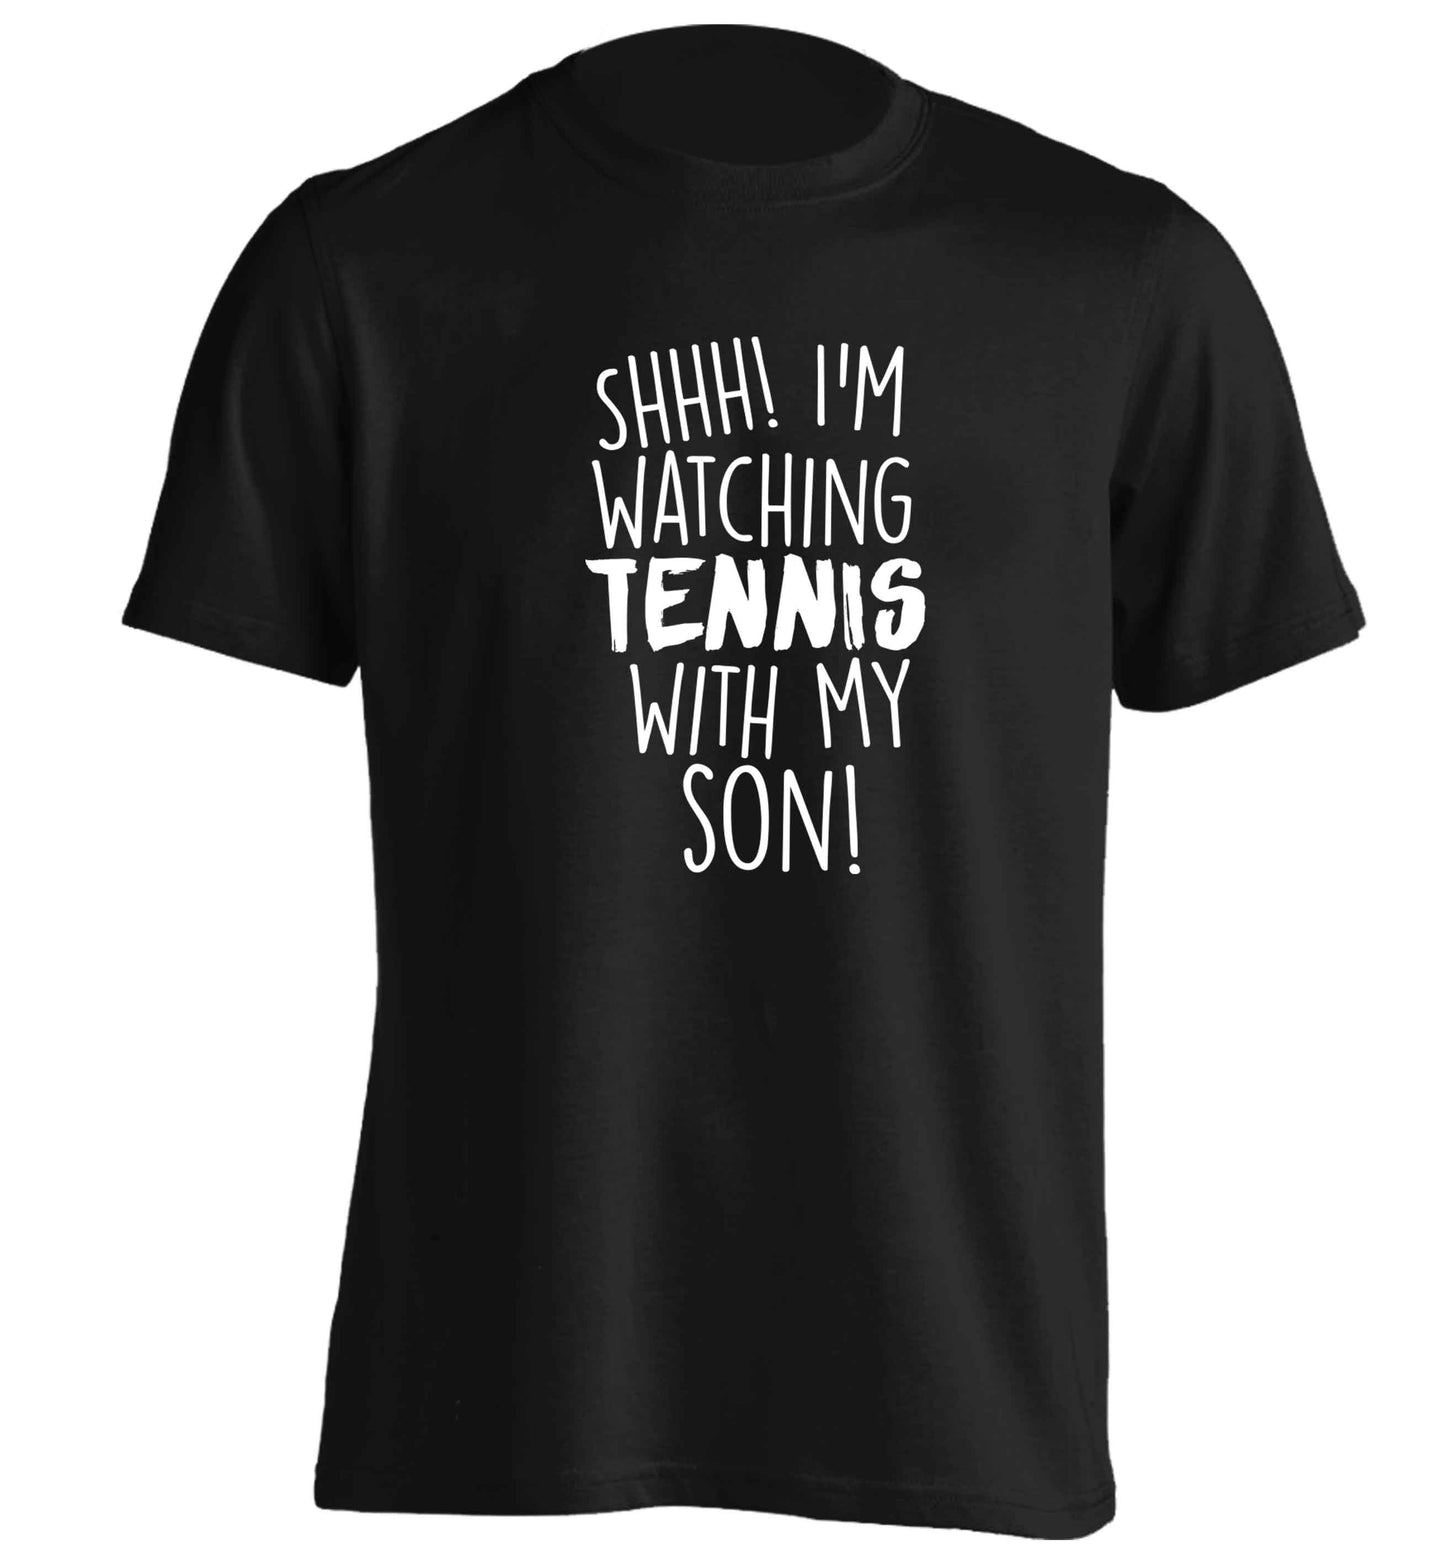 Shh! I'm watching tennis with my son! adults unisex black Tshirt 2XL